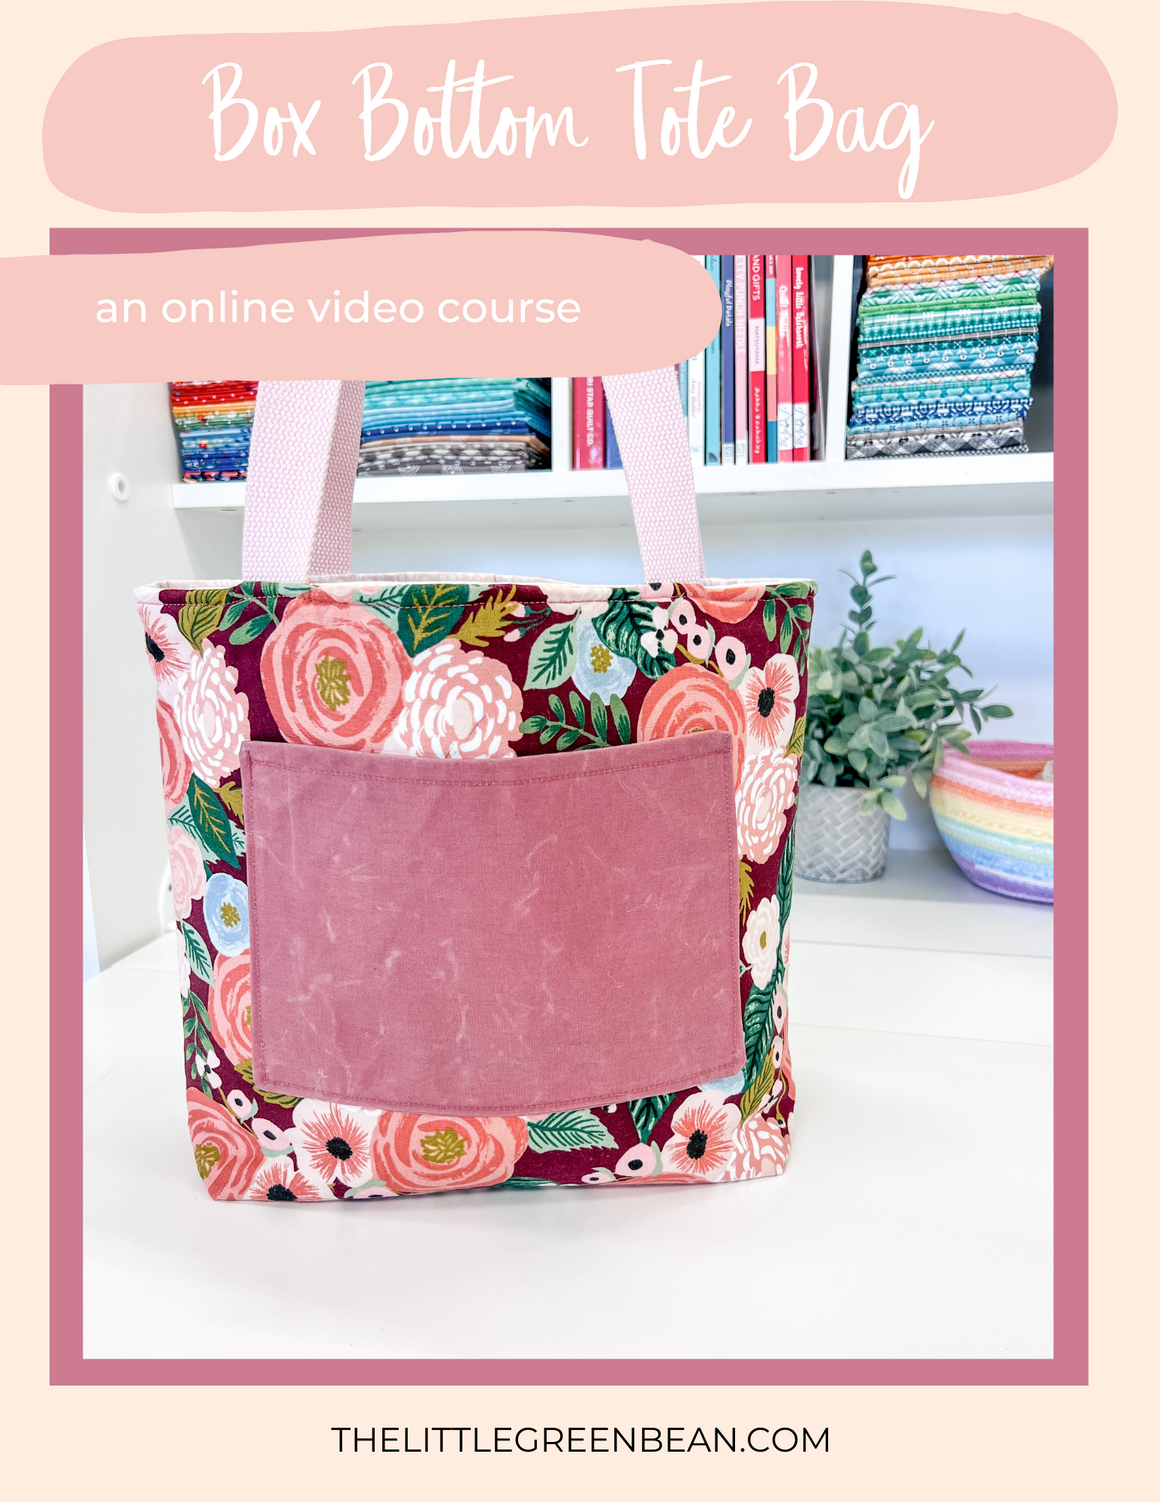 Box bottom tote bag | A video course